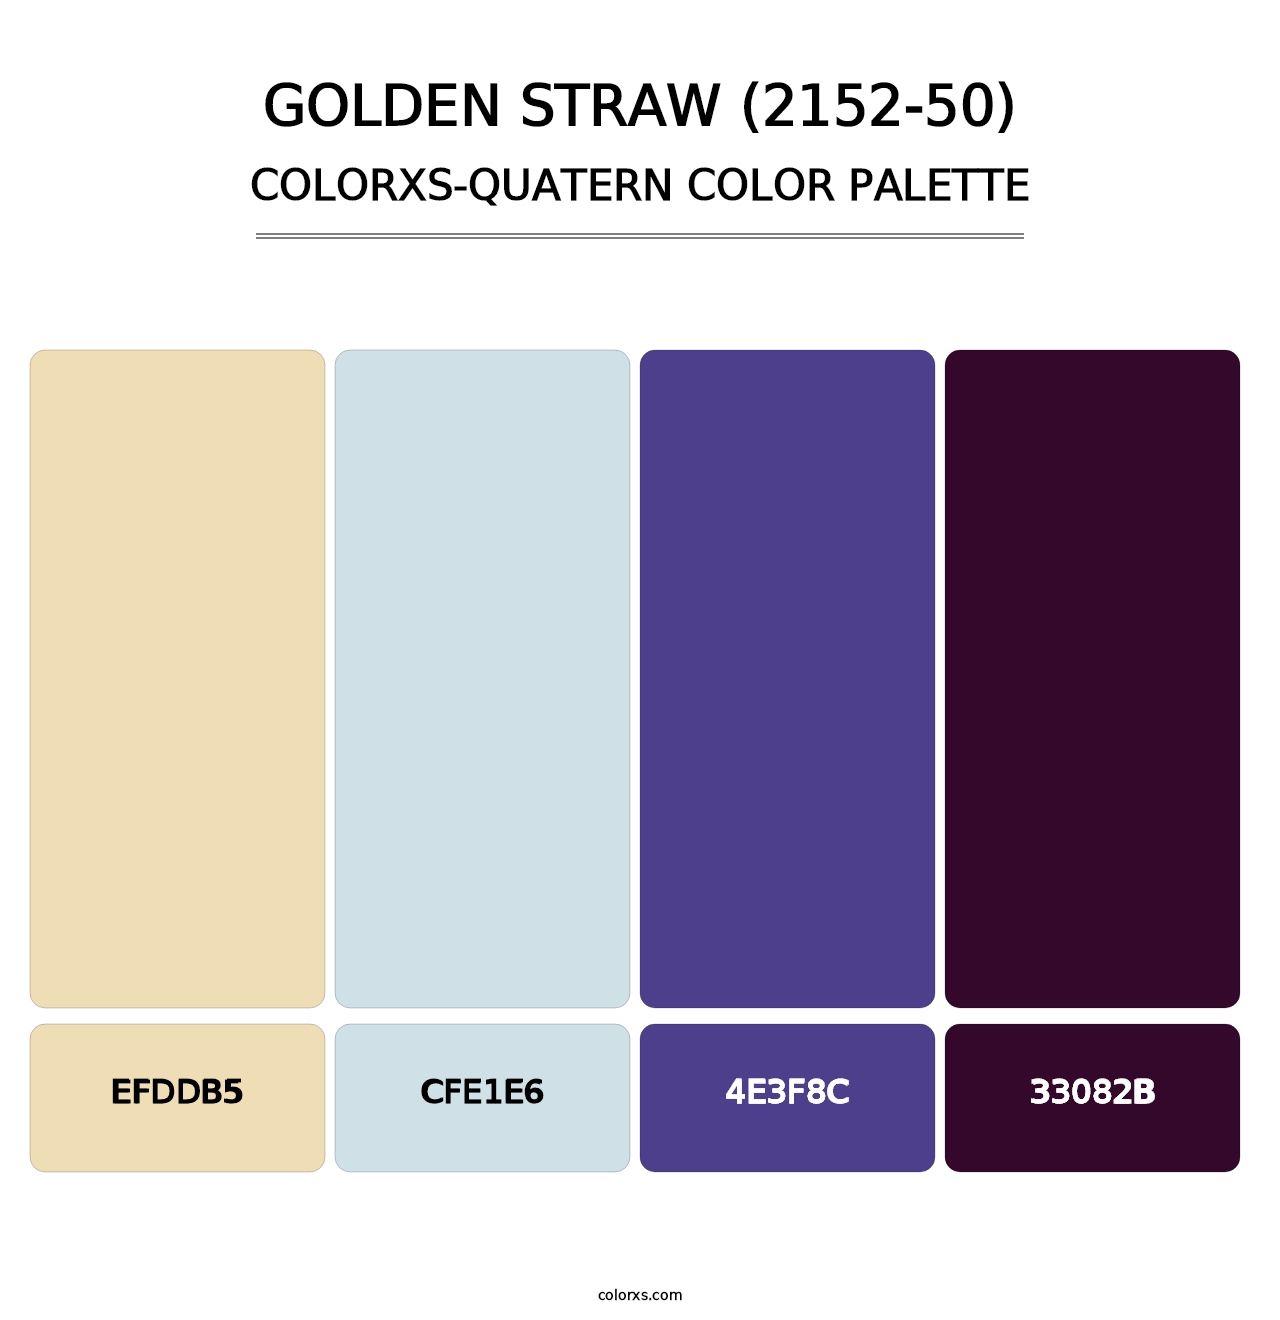 Golden Straw (2152-50) - Colorxs Quatern Palette